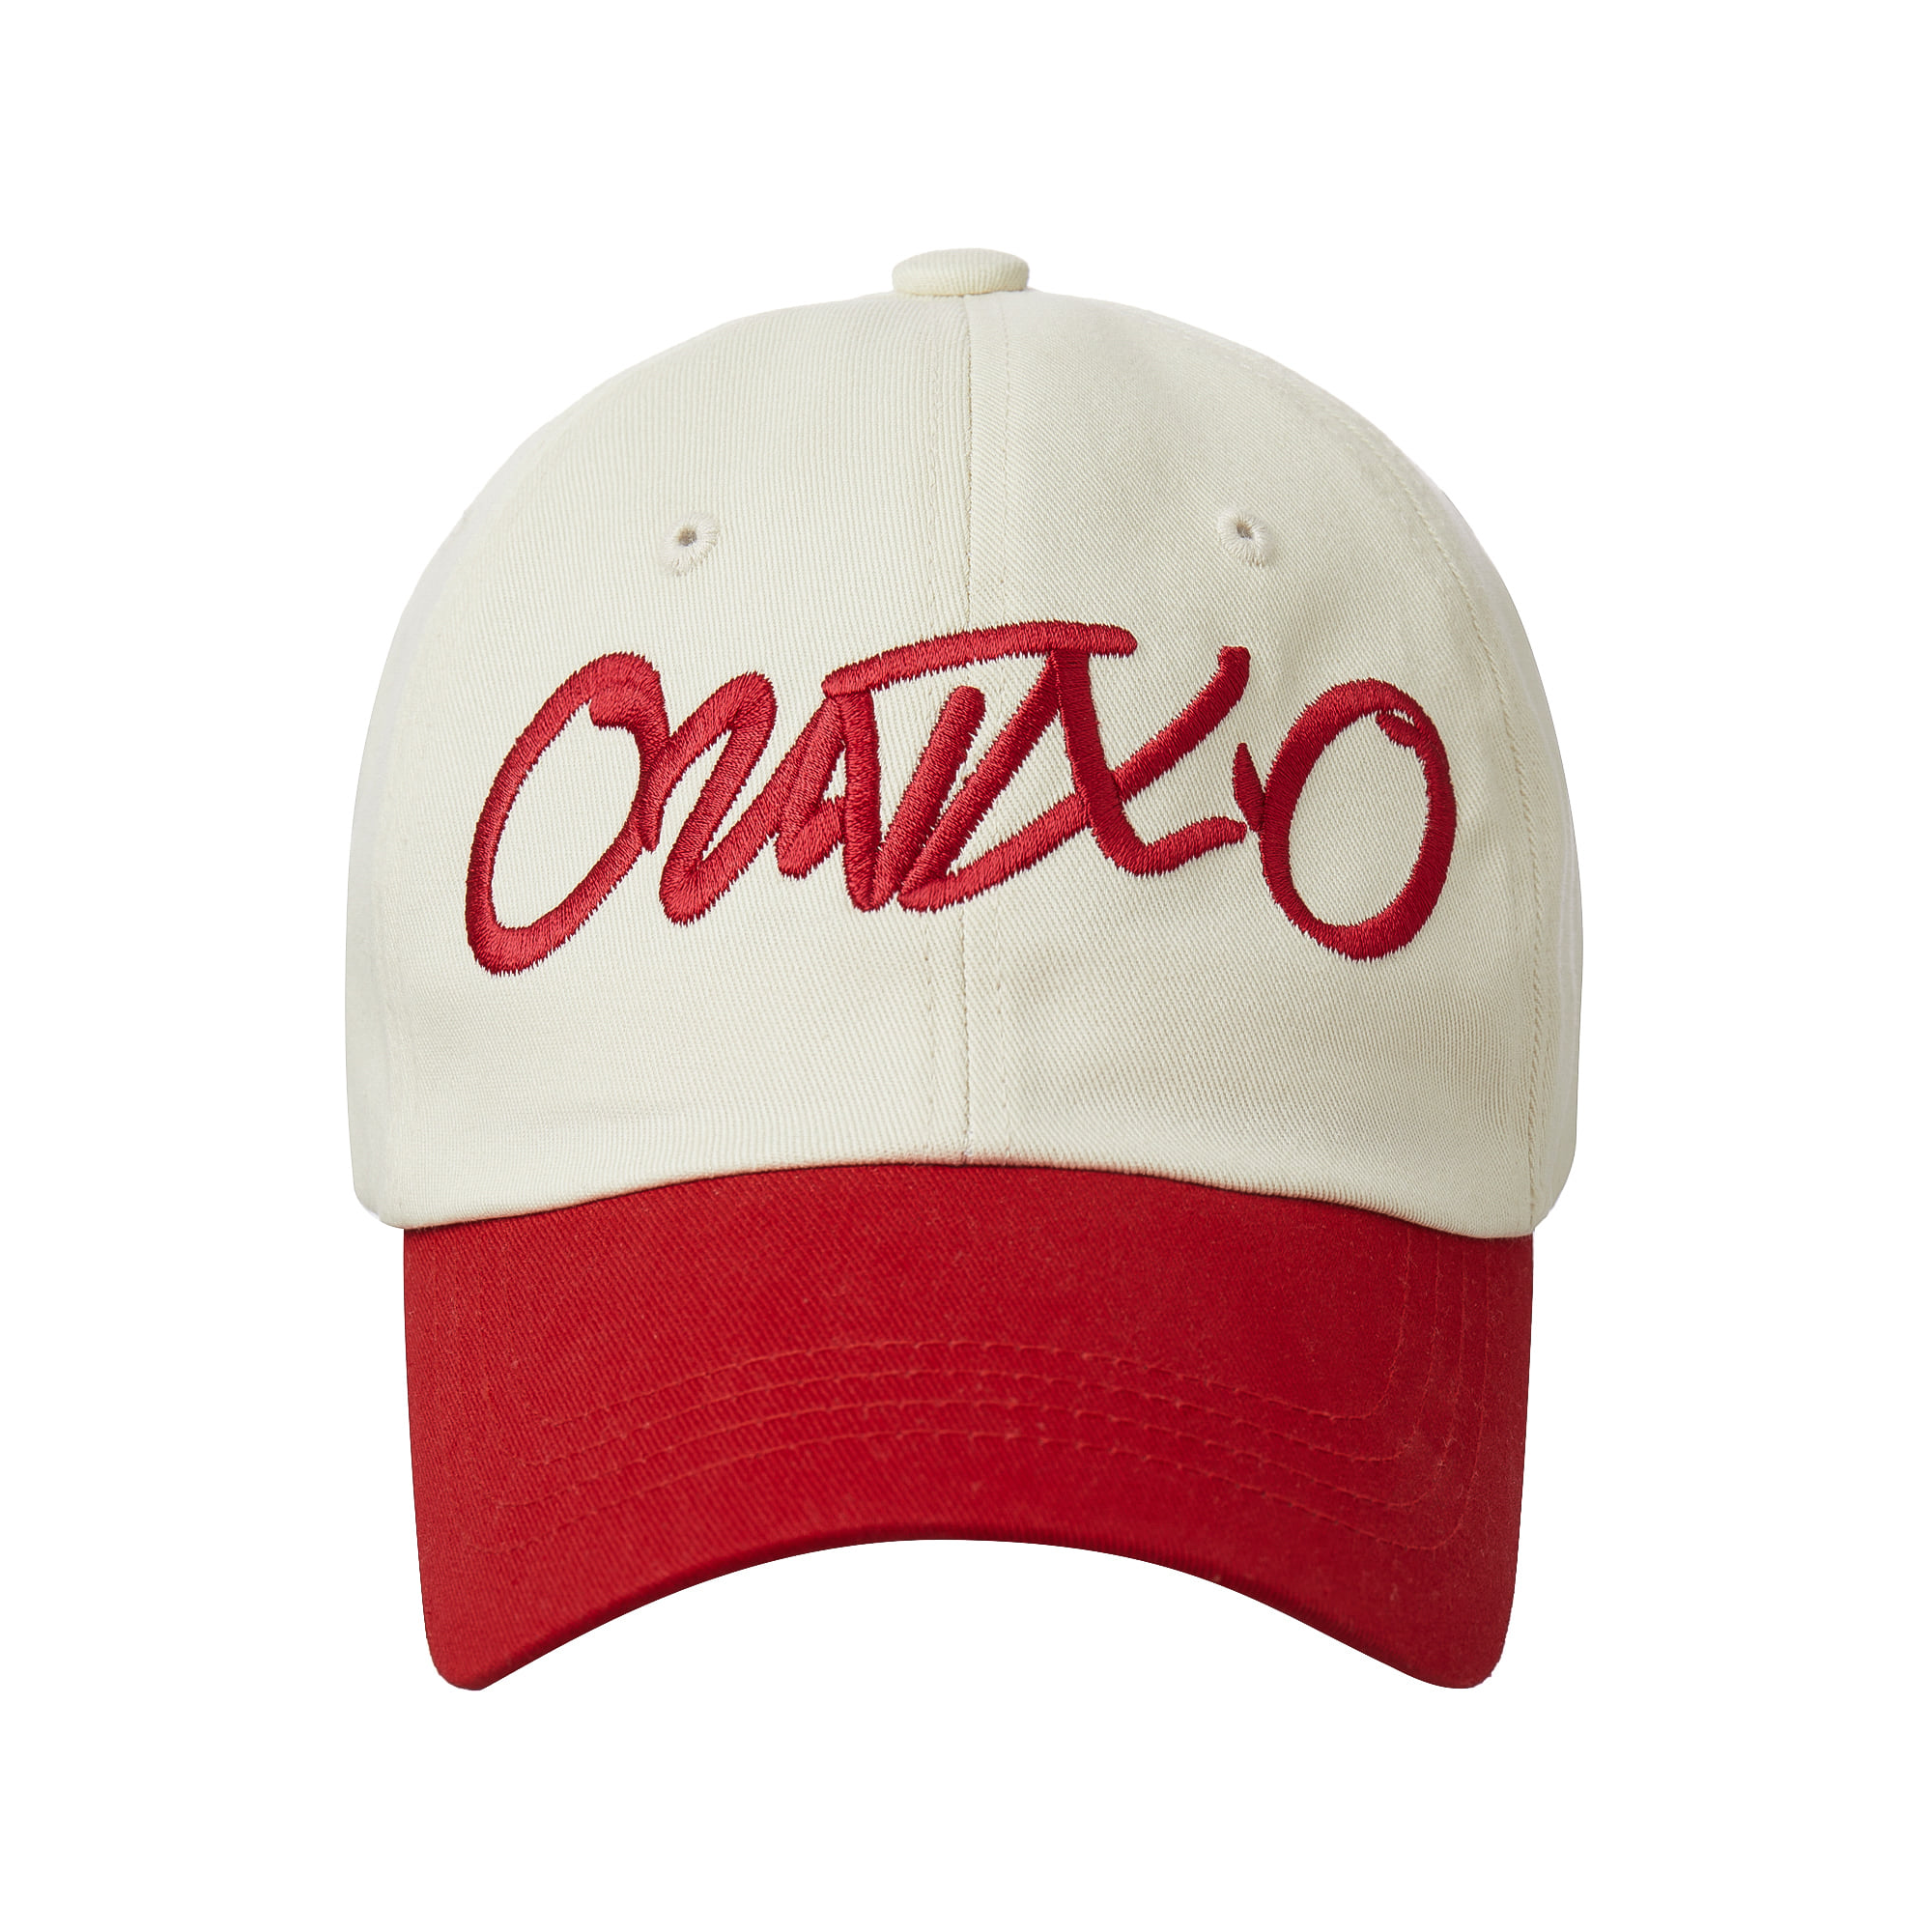 OUTX.O ballcap red